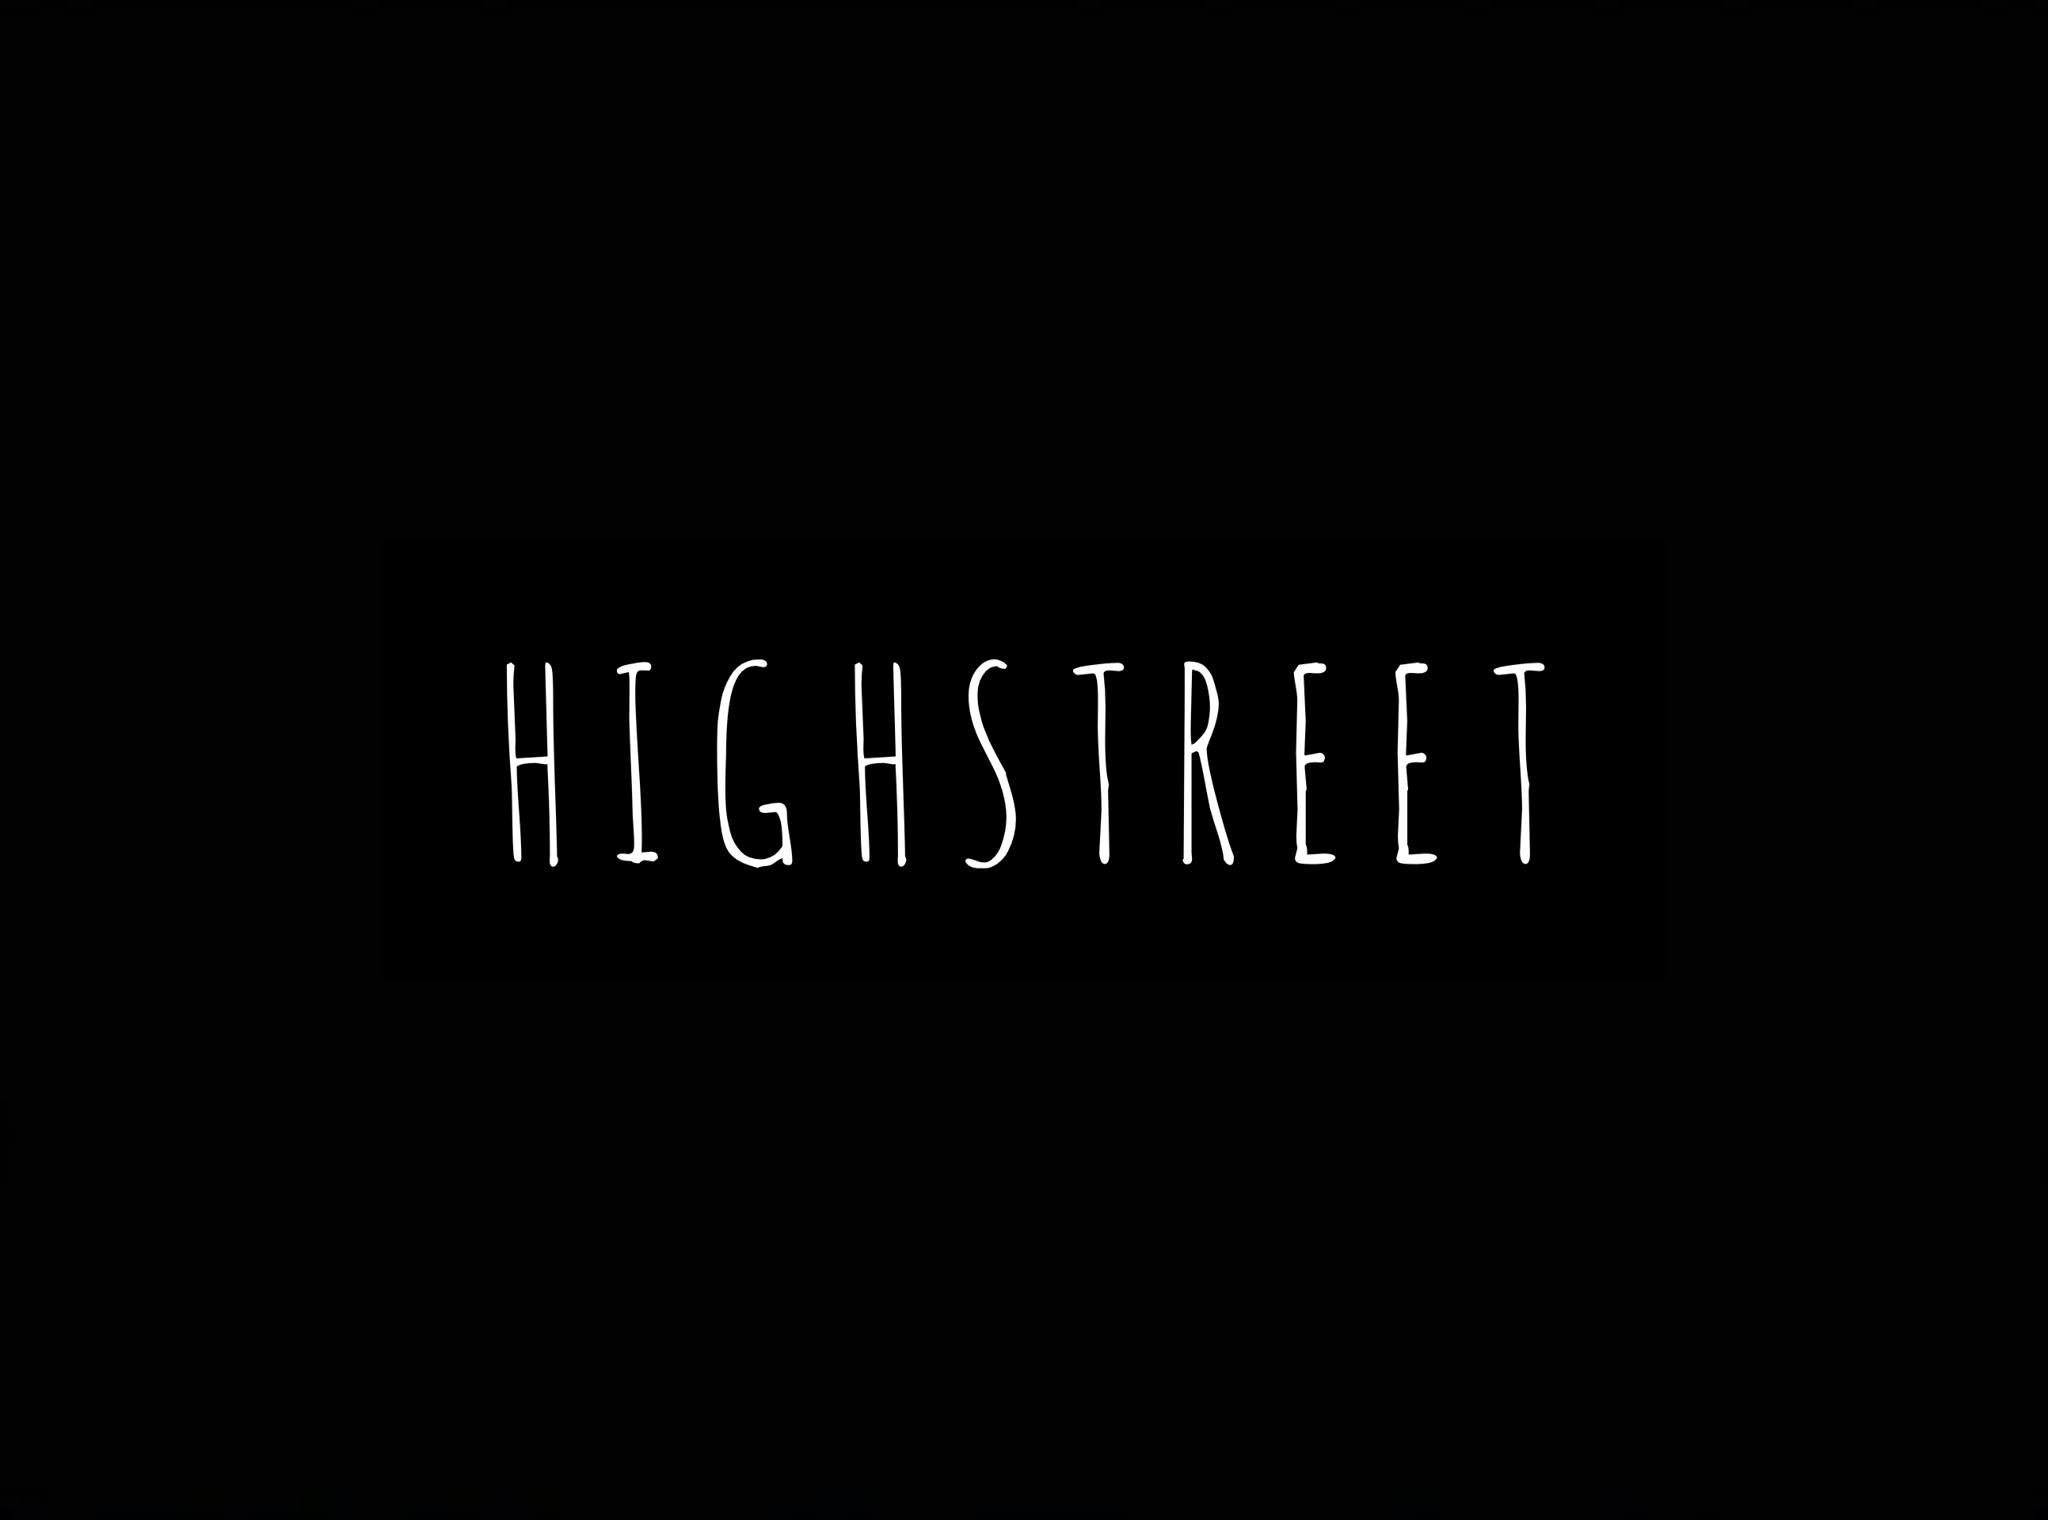 Highstreet Hooligans